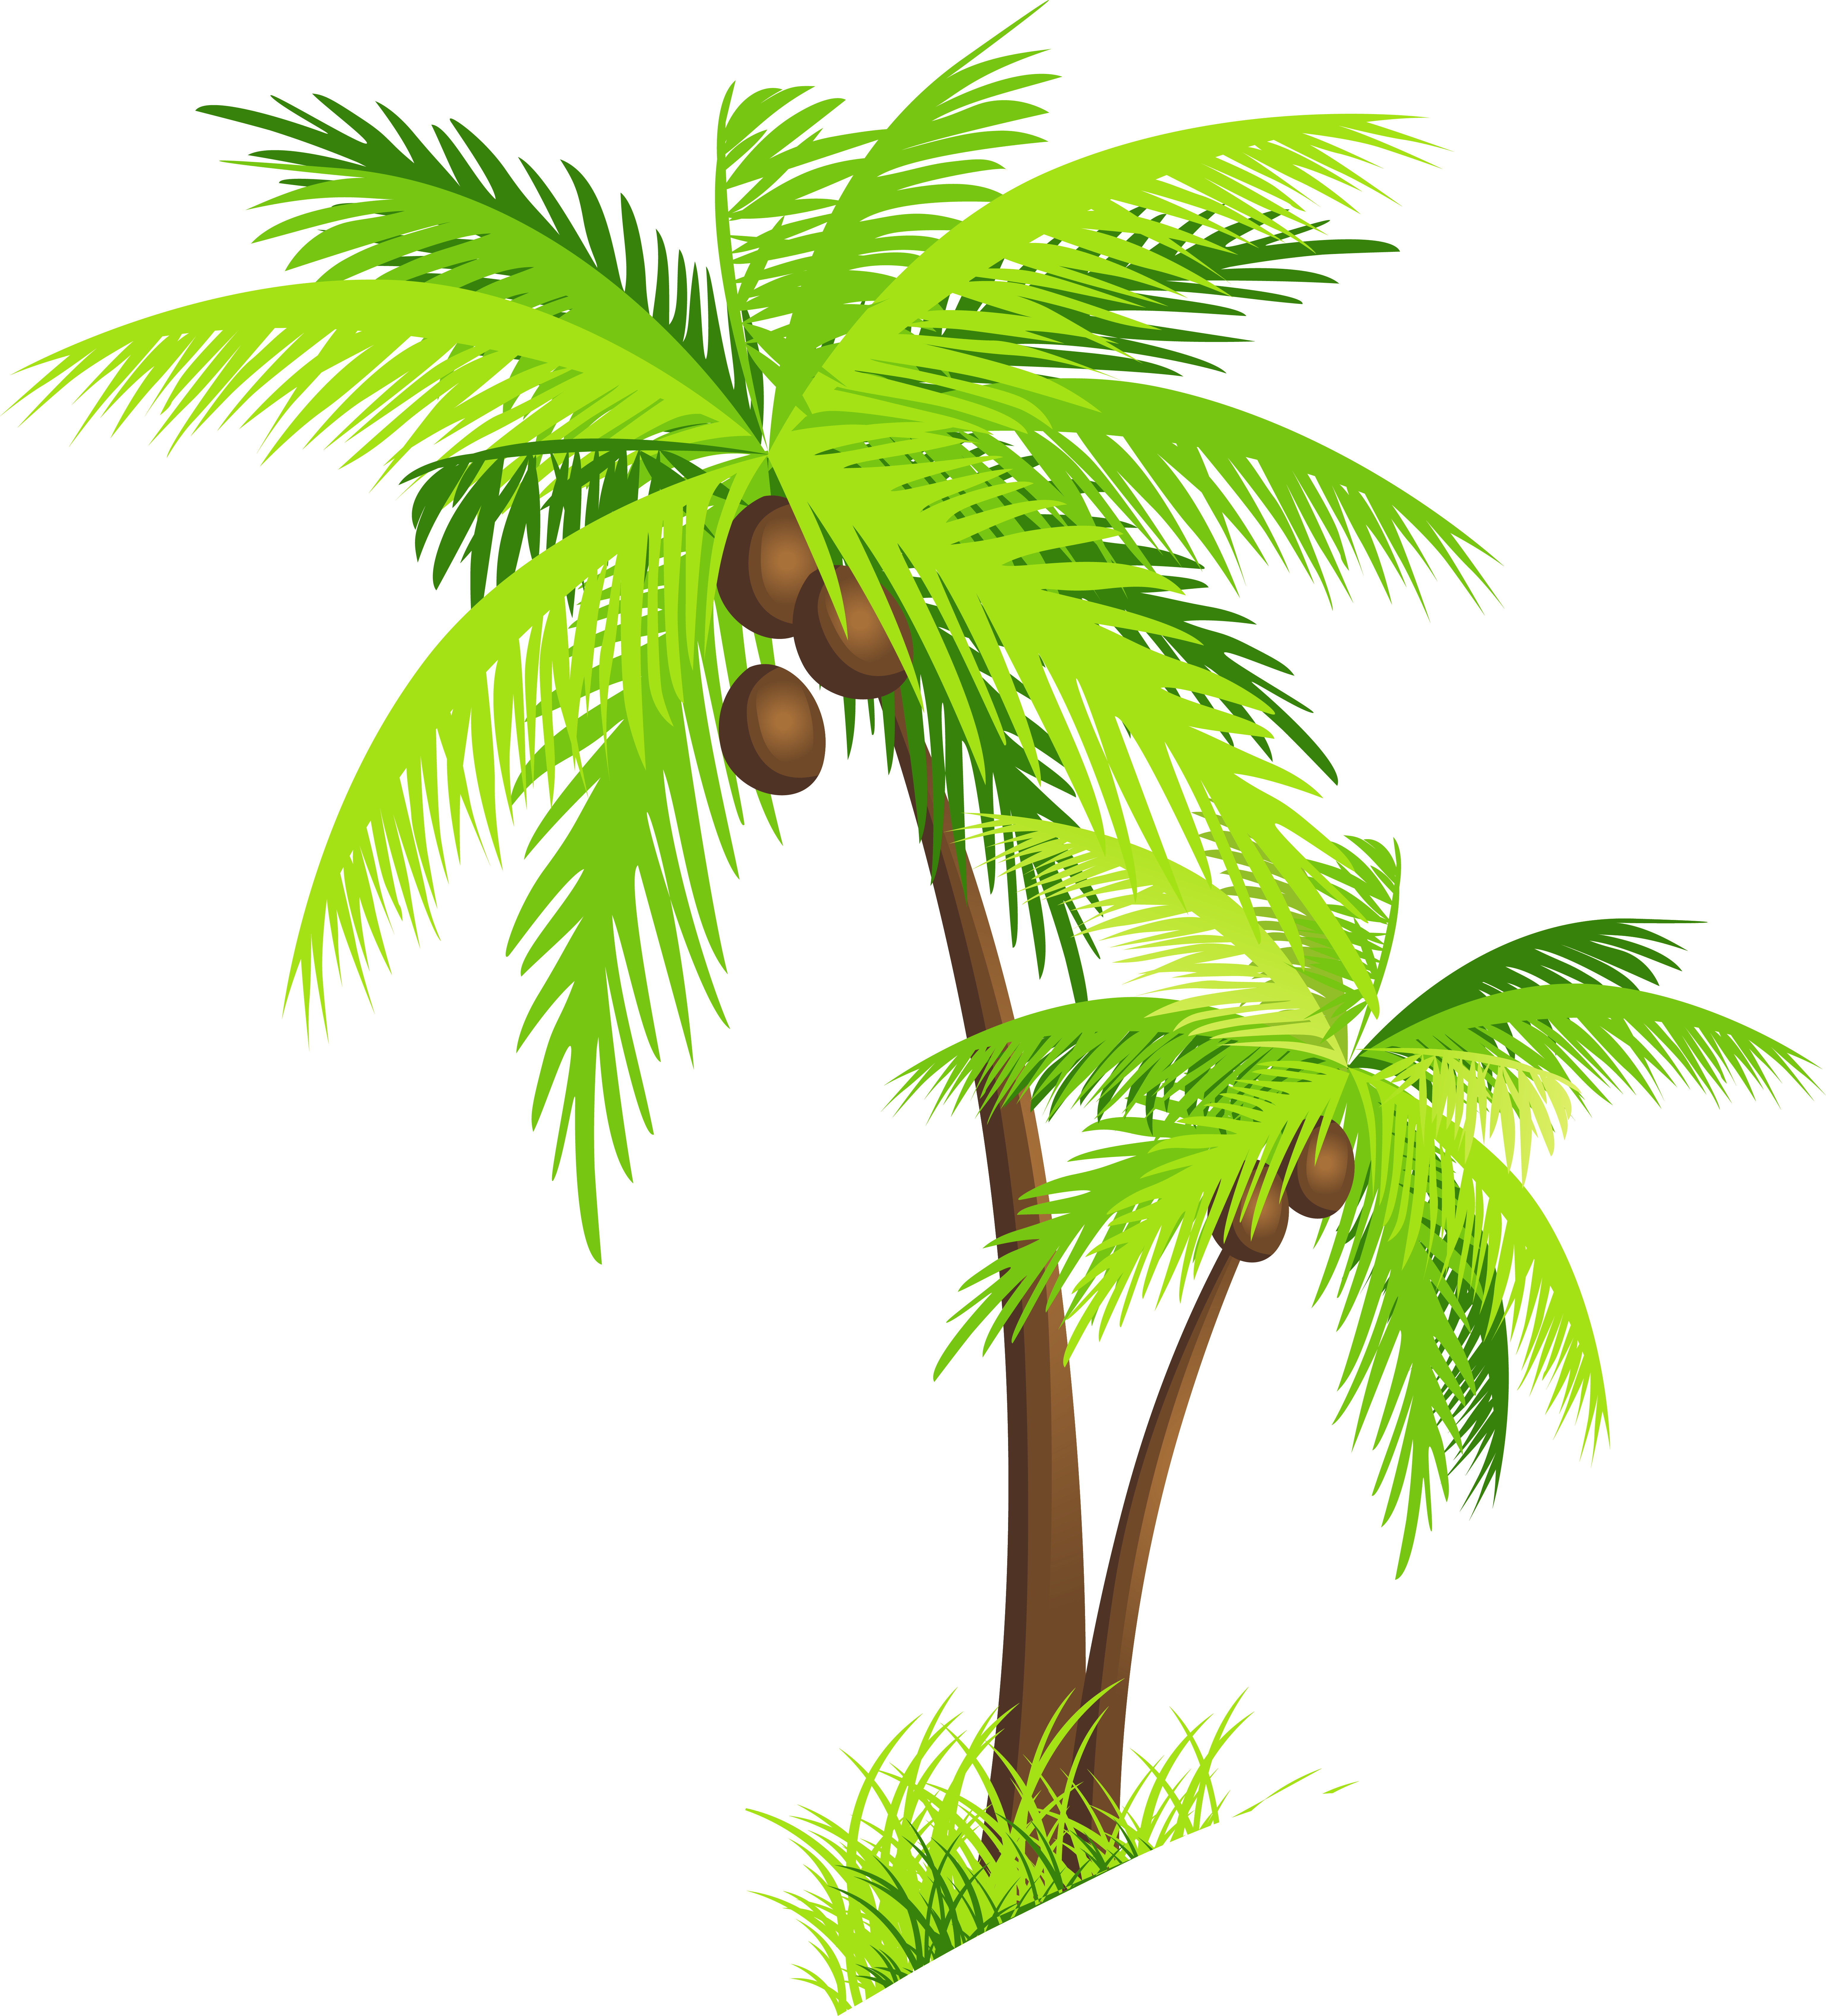 Date tree palm clipart - ClipartFox